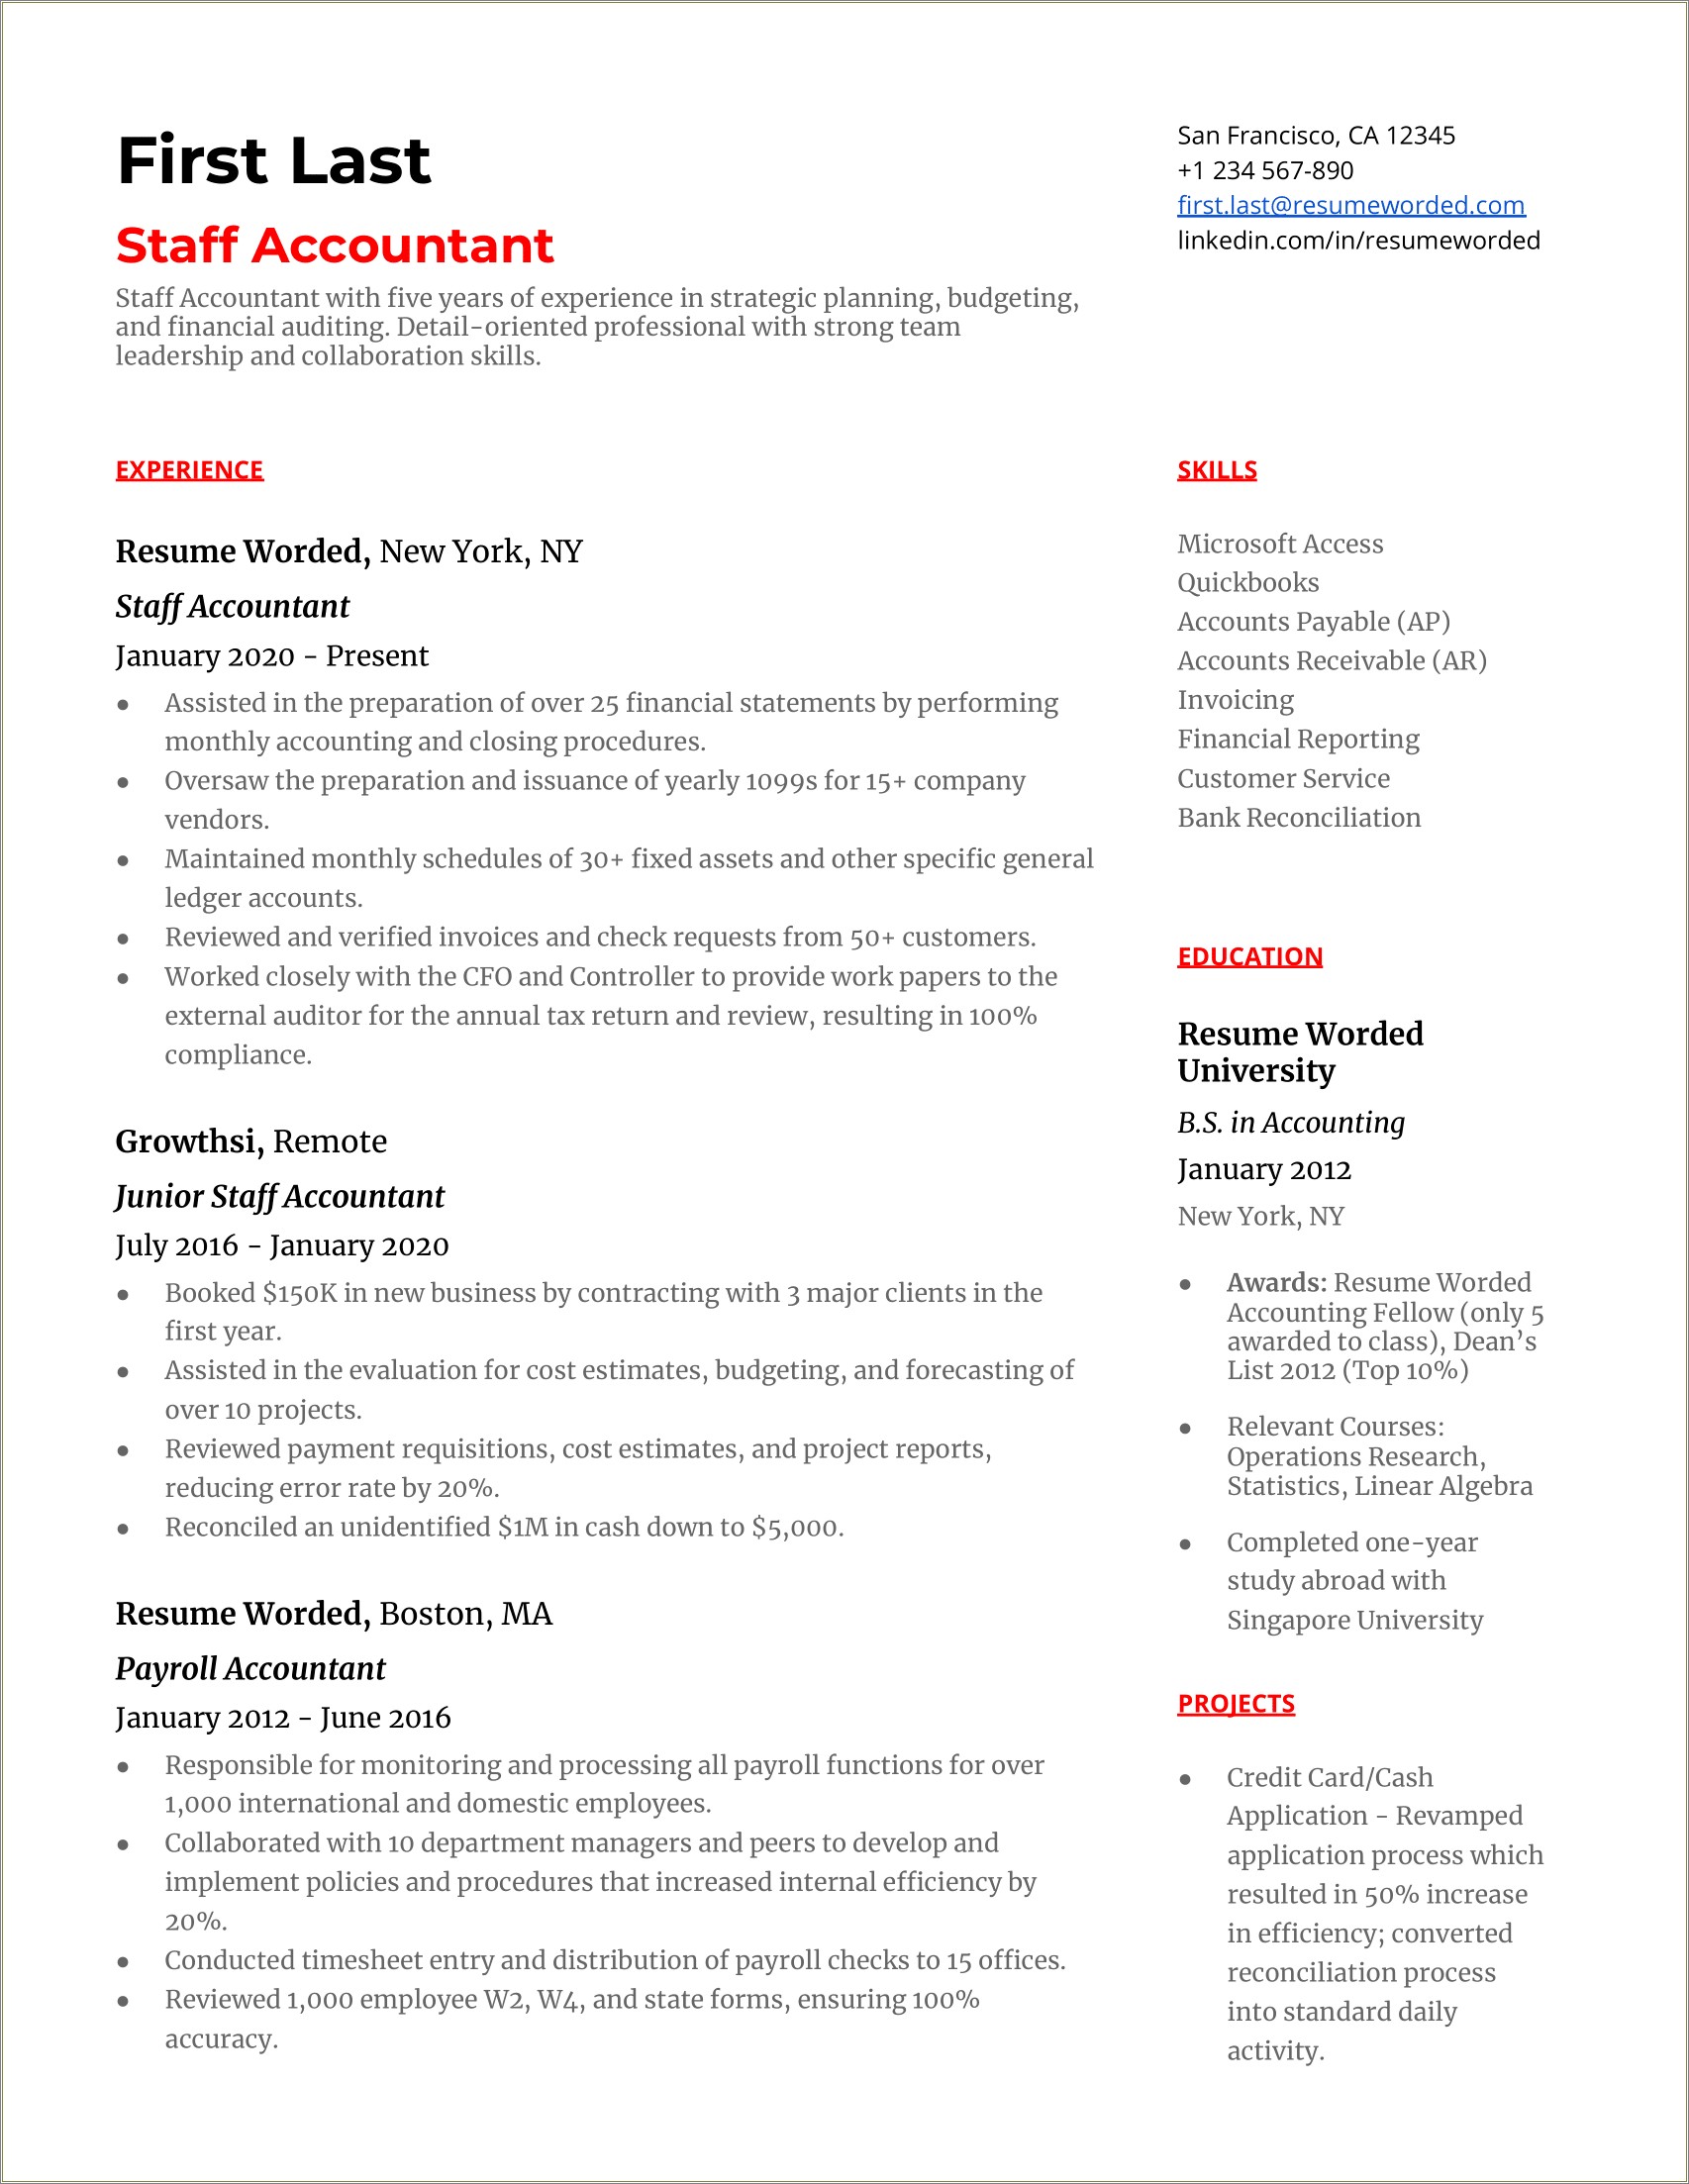 Sample Resume Skills For Accounting